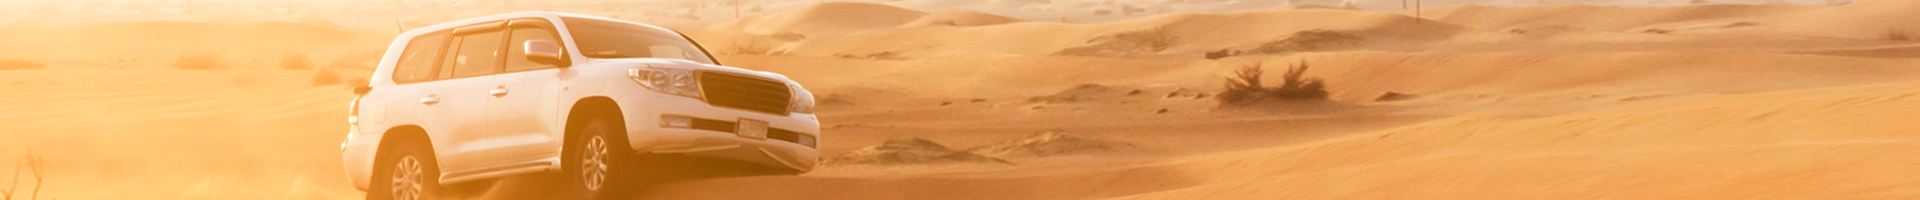 沙漠胎-次類別banner